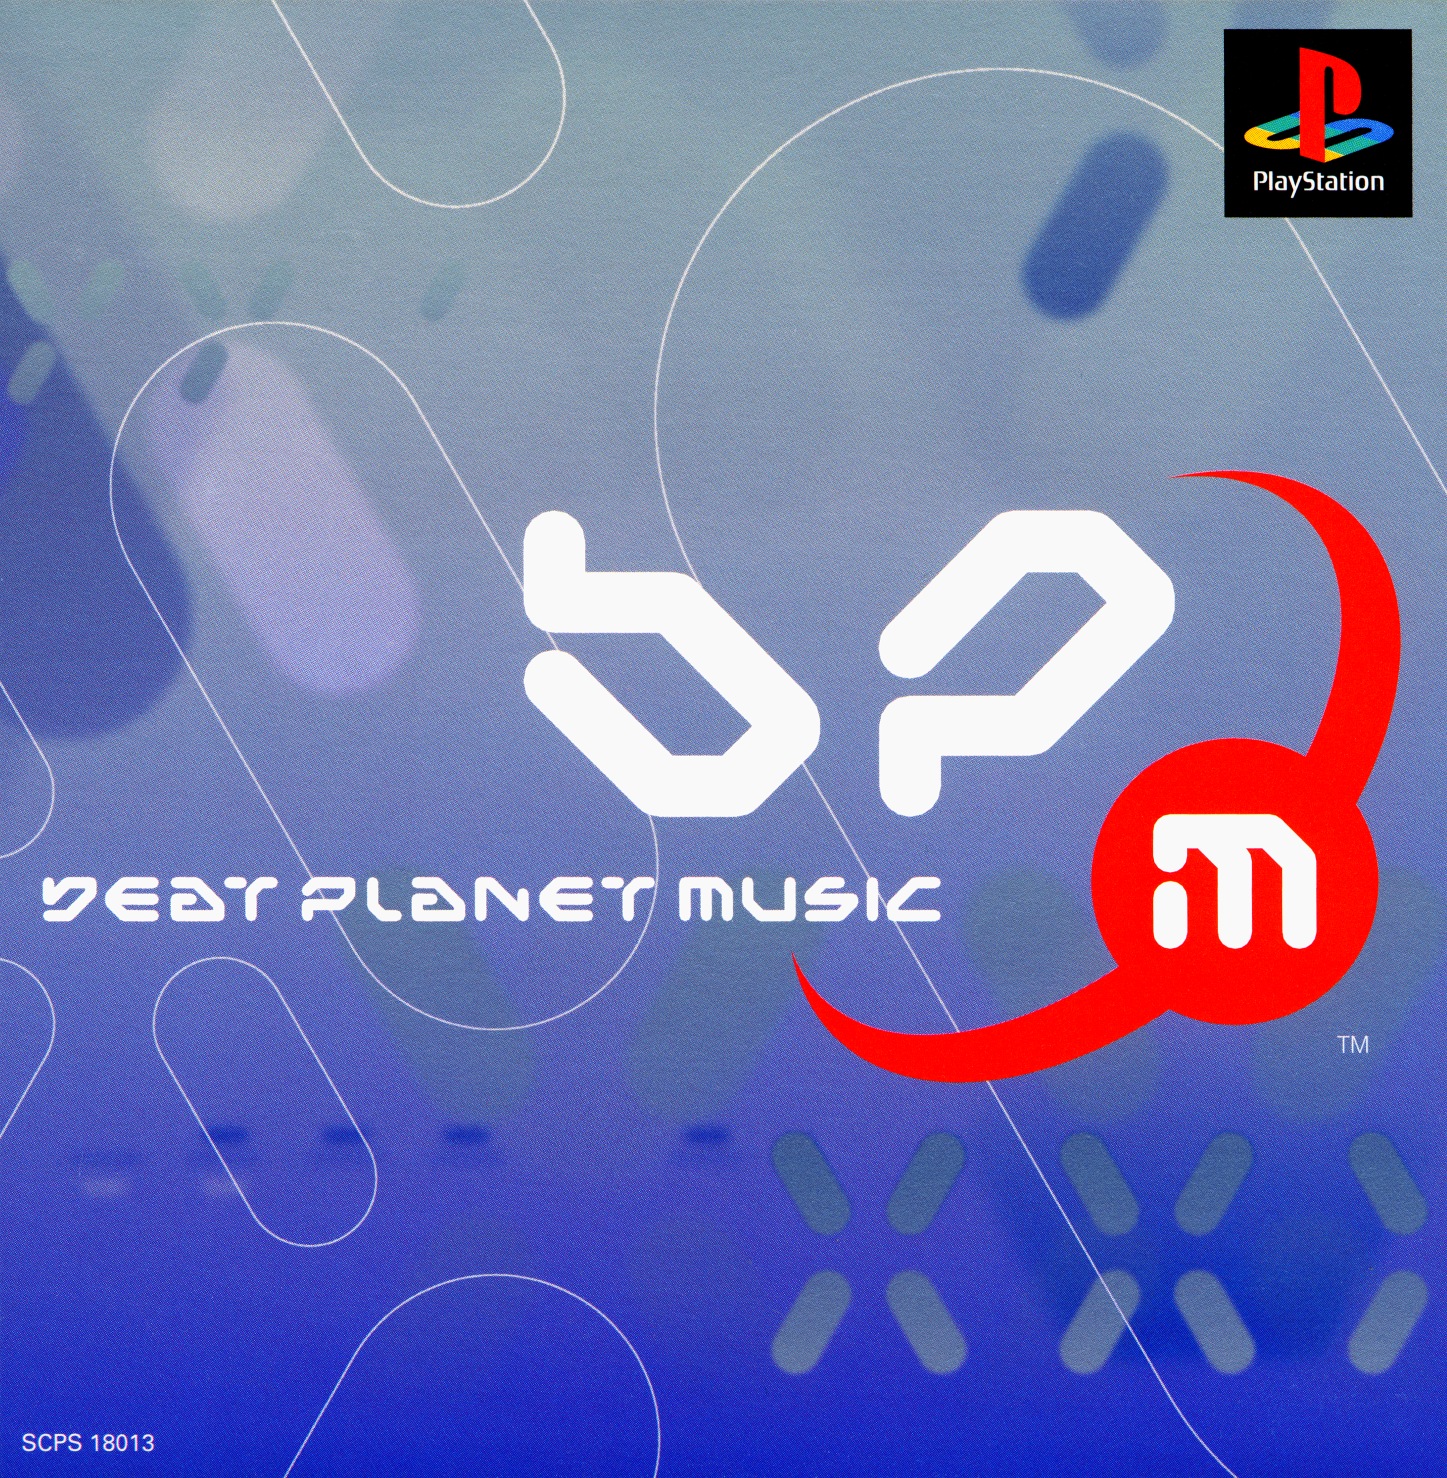 PLAYSTATION Music. Music 2000 PLAYSTATION. Beat Planet Music. PLAYSTATION 1 под музыку.